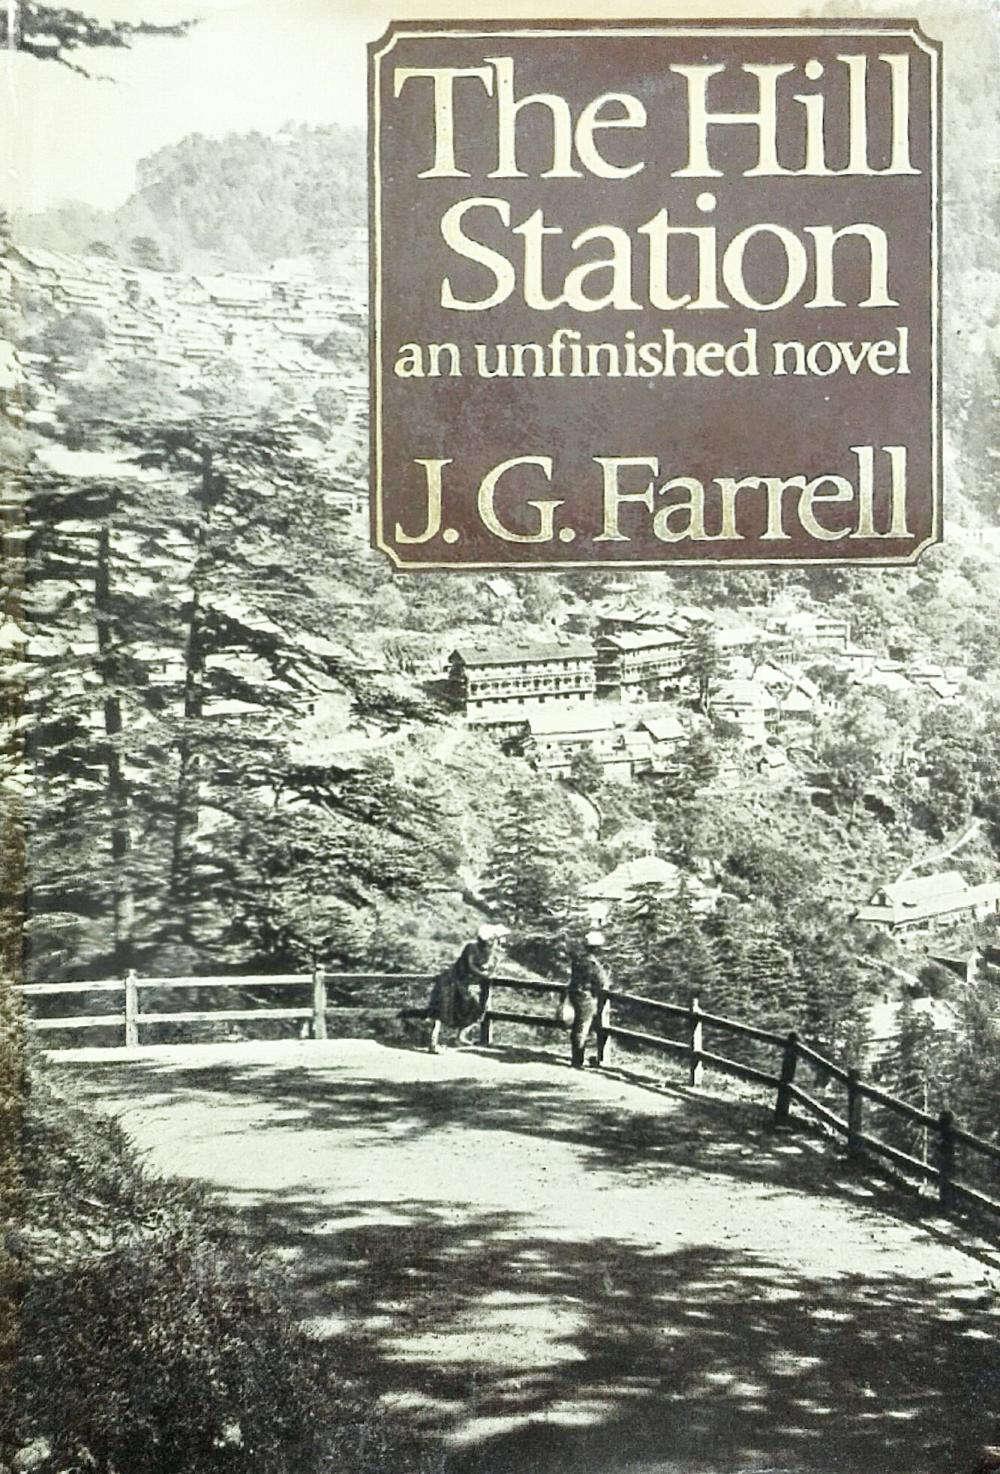 The Hill Station J.G. Farrell